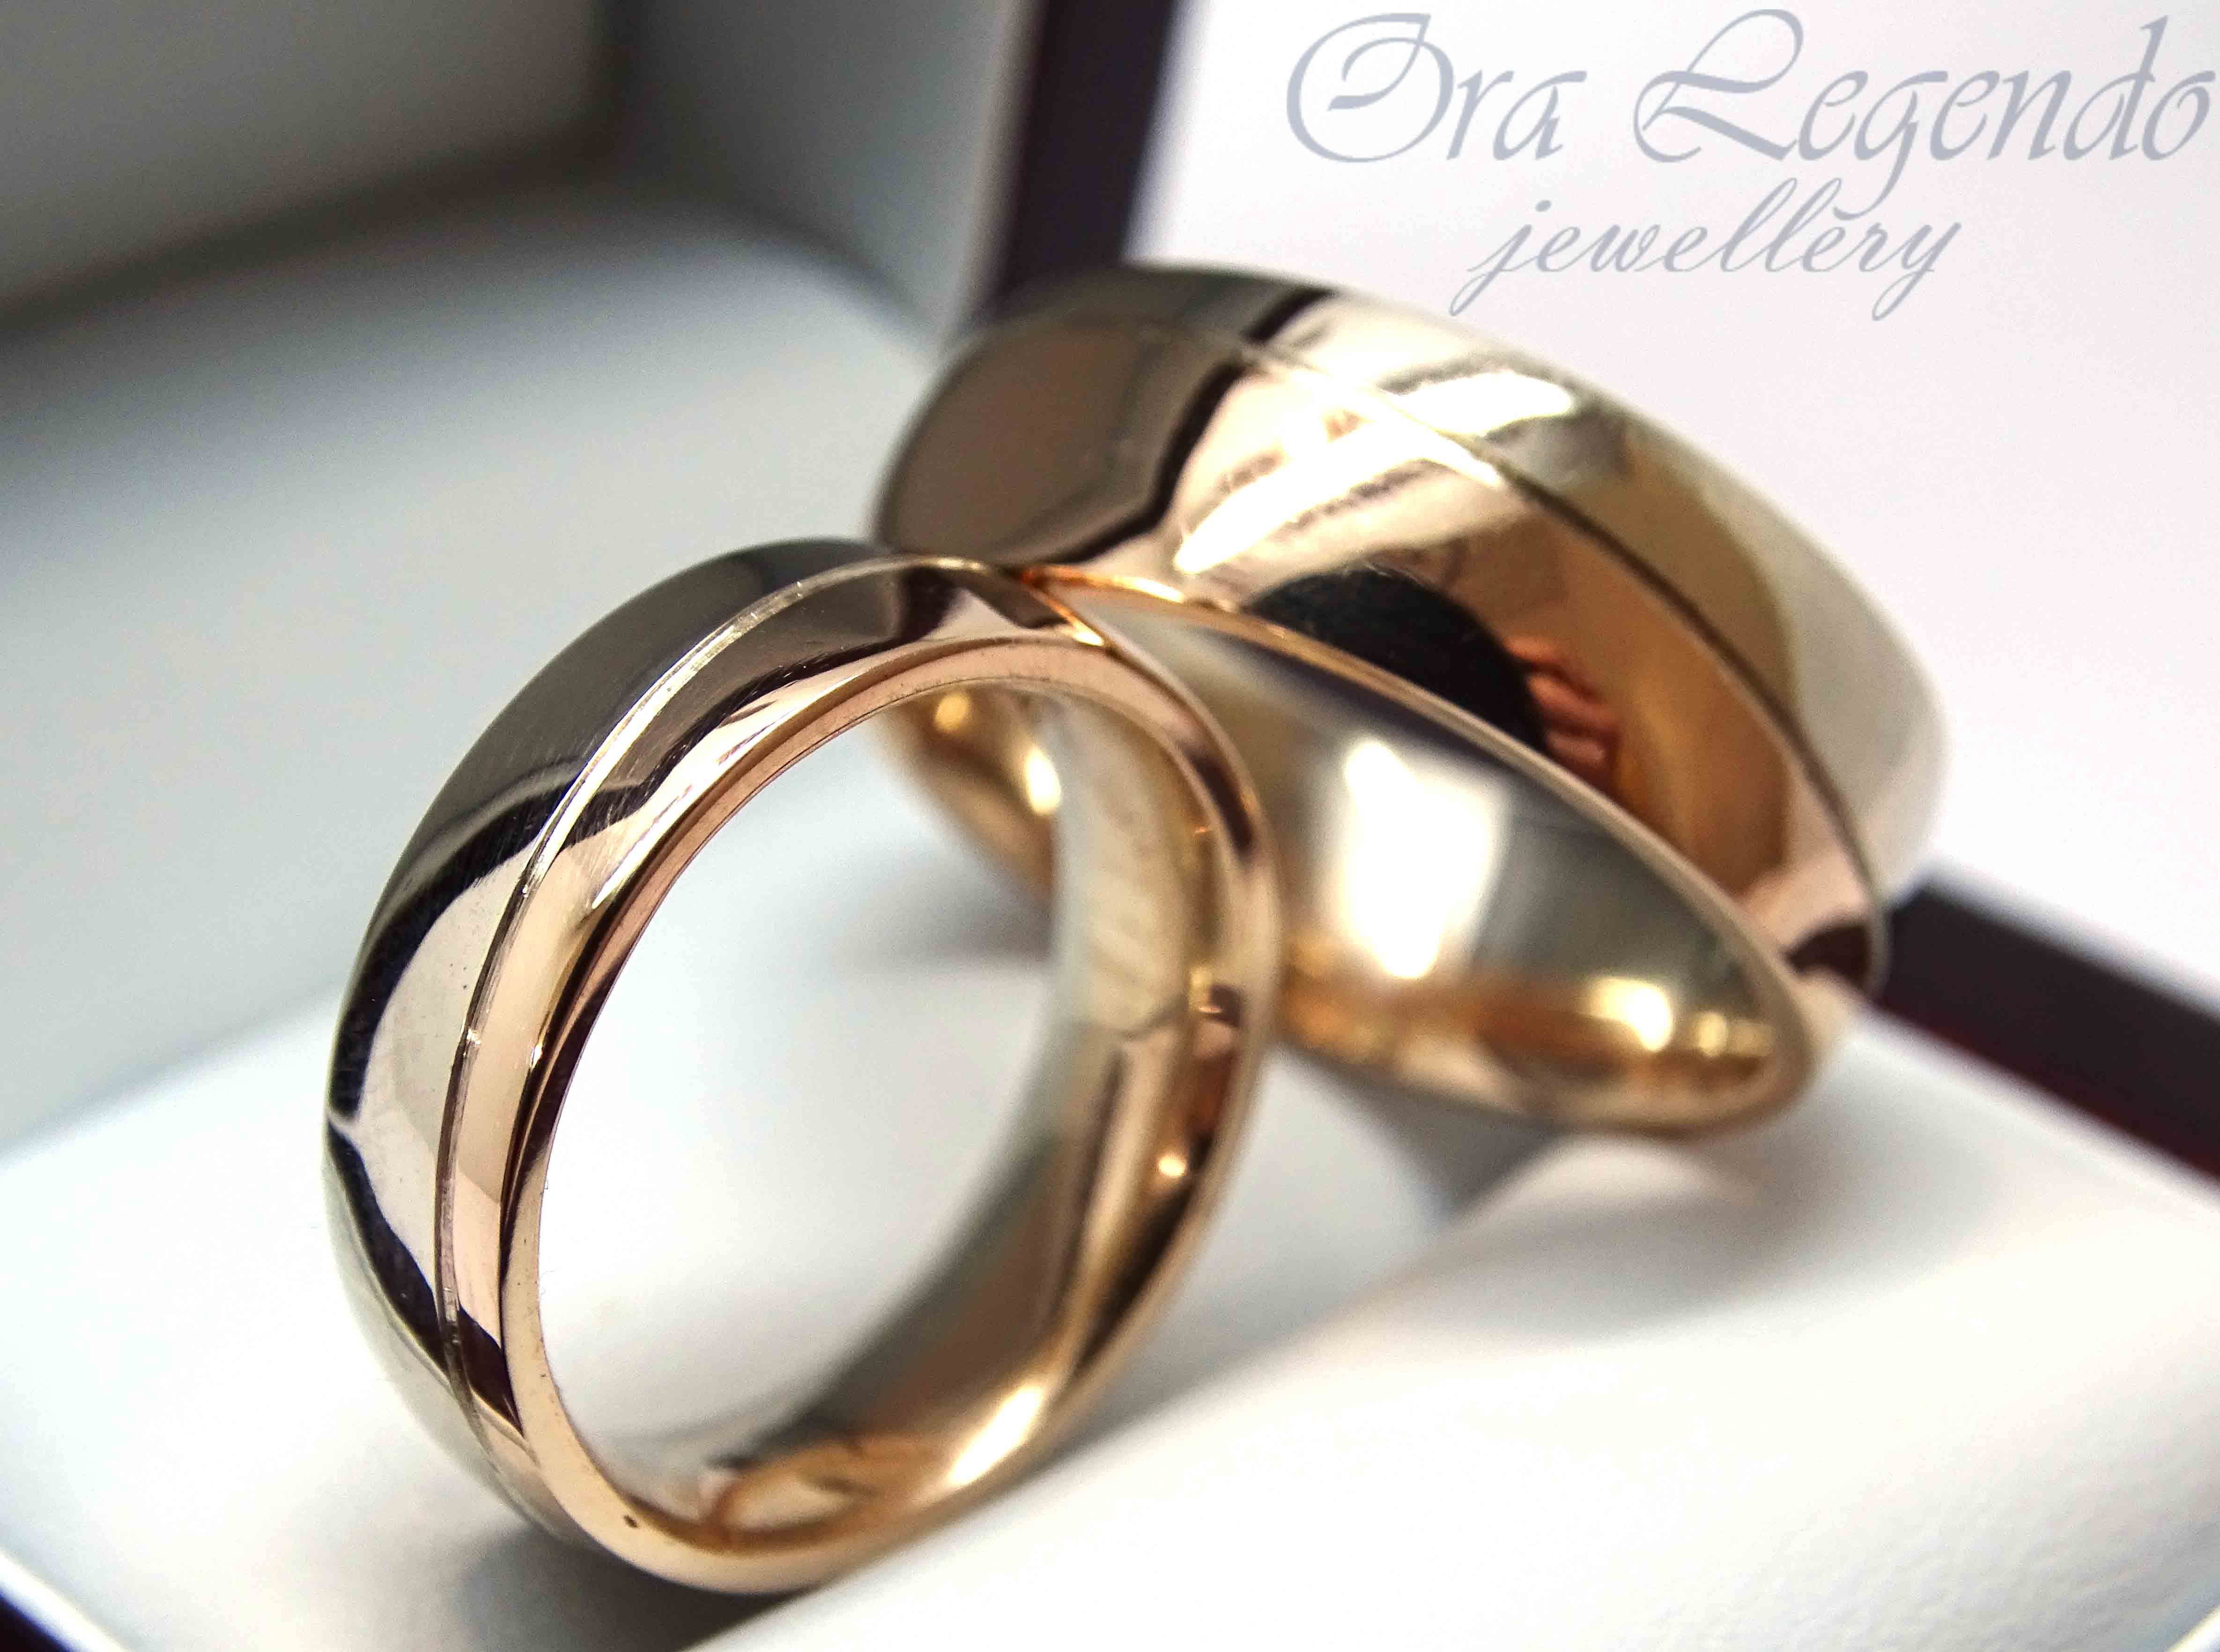 Dean pea emotional Laulību gredzeni no kombinēta zelta | Ora Legendo, Riga